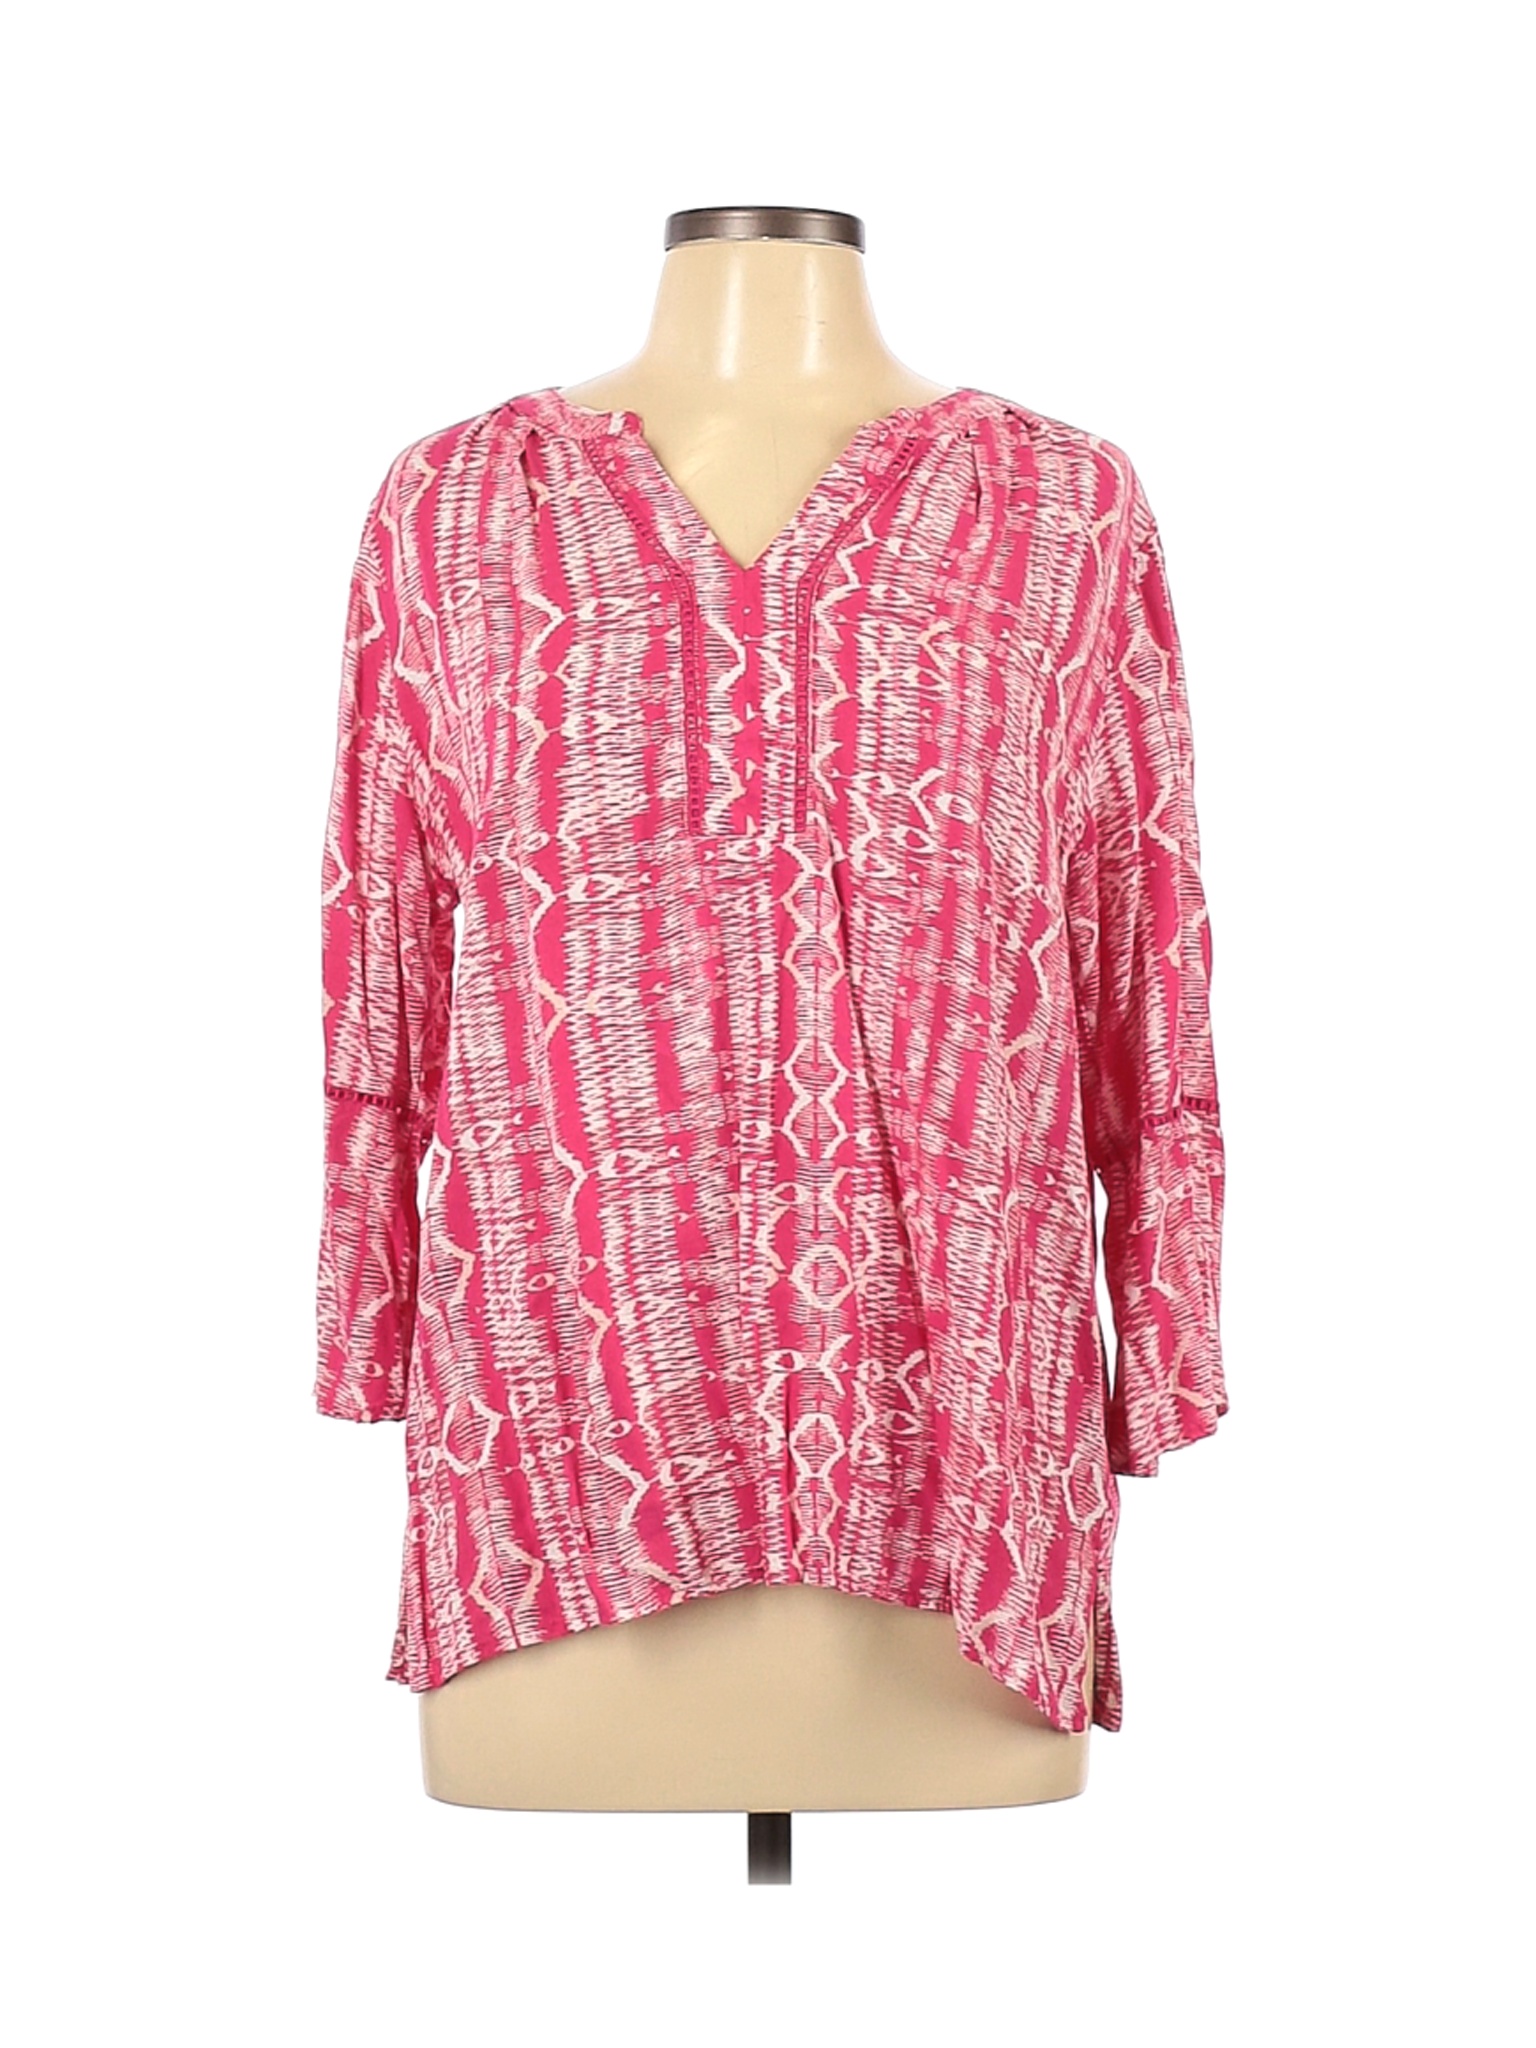 Gloria Vanderbilt Women Pink 3/4 Sleeve Blouse L | eBay